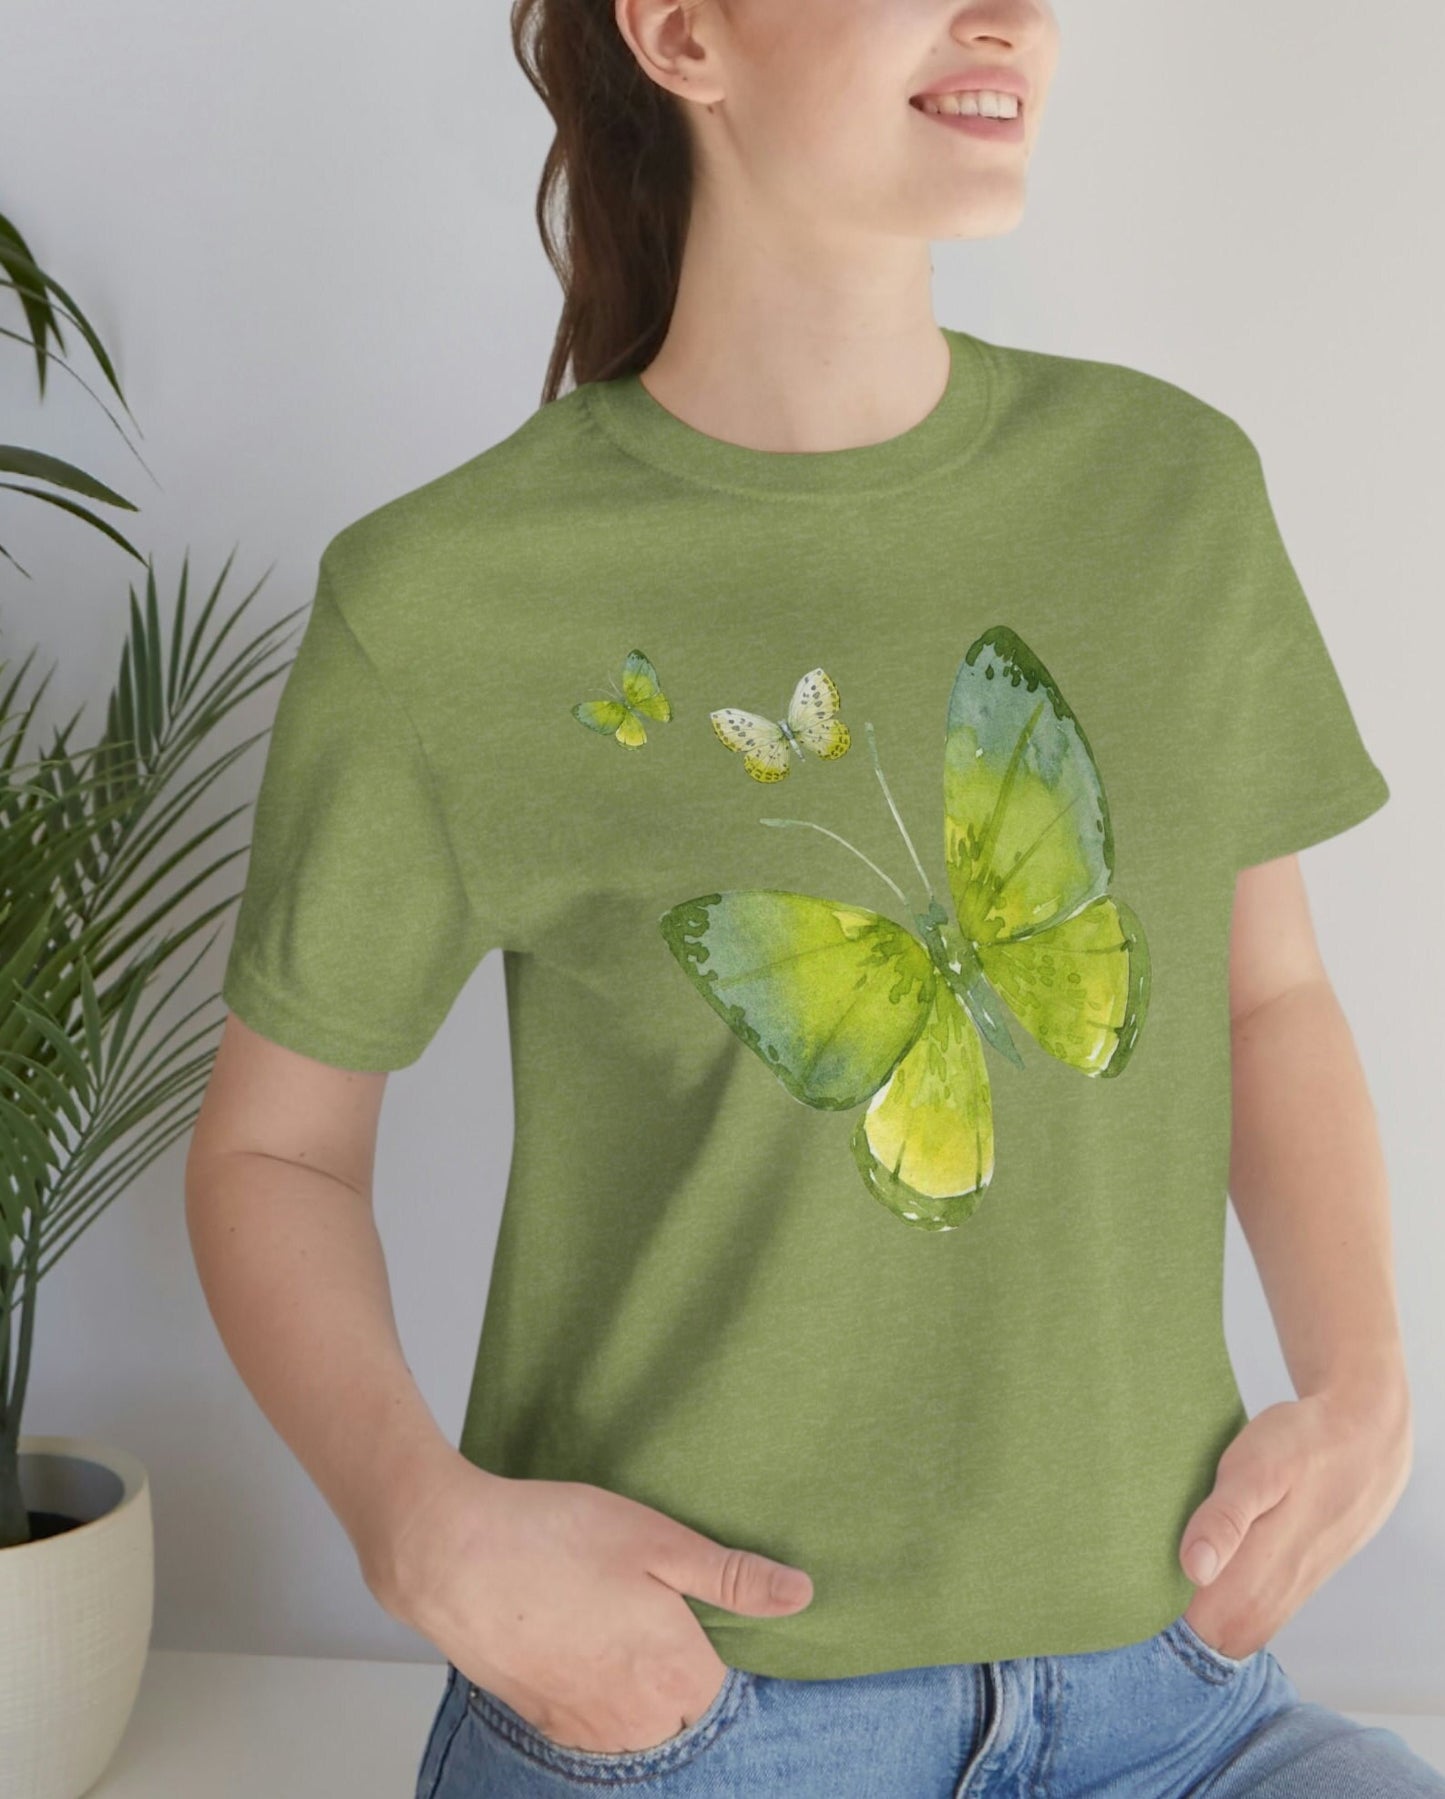 Butterfly T-shirt, Butterfly Tee, Nature Lover Shirt, Butterflies Tee Gift, Insect Shirts, Aesthetic Shirt, Butterfly Cute Shirt